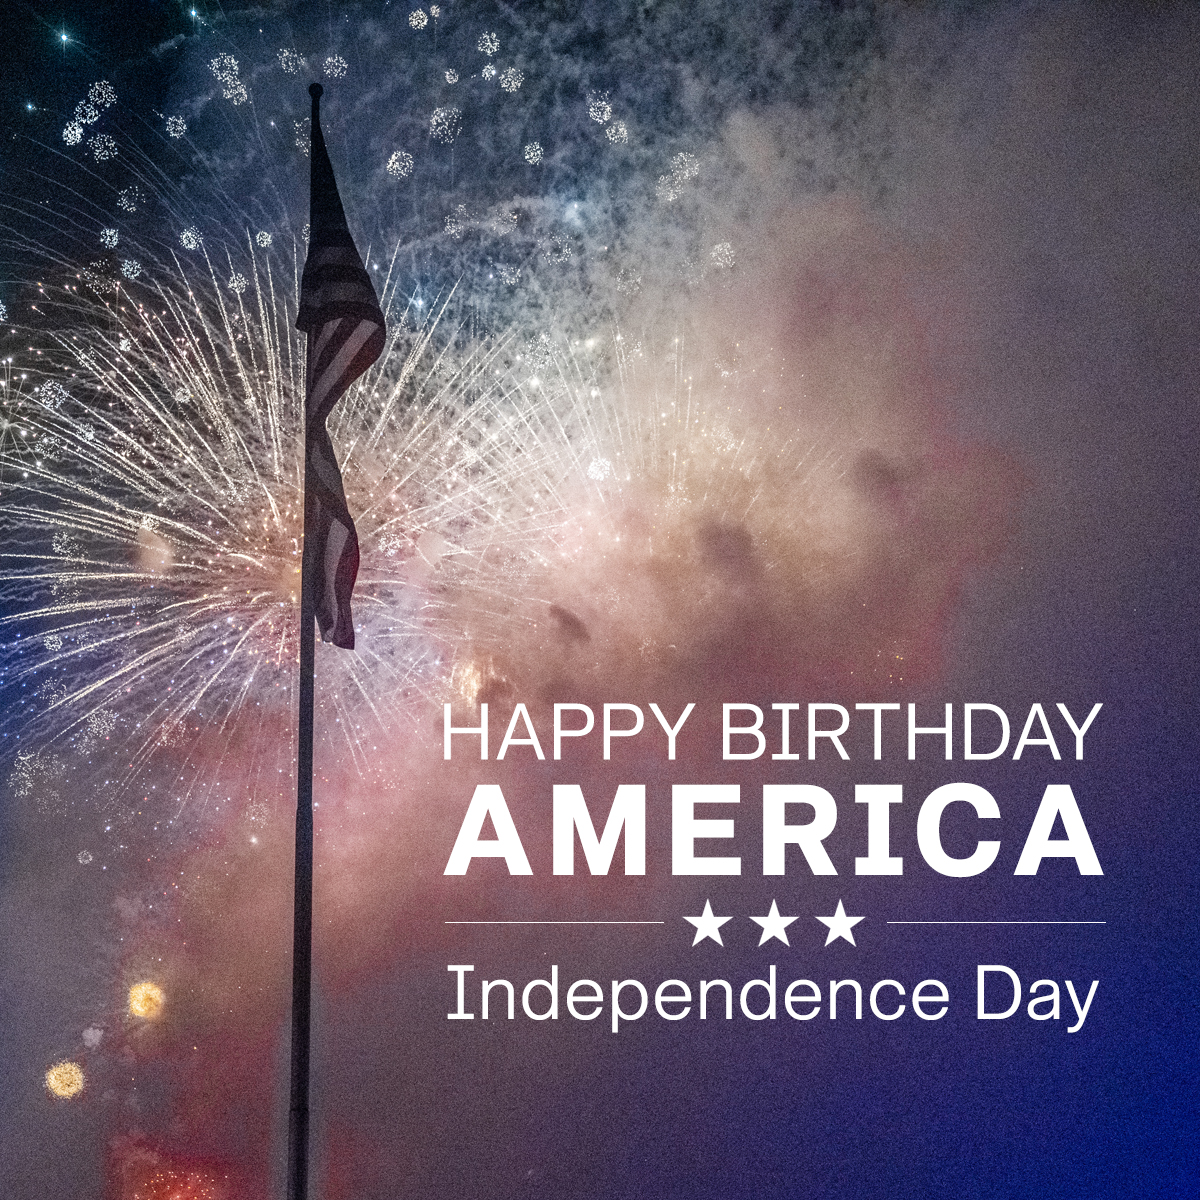 Happy Birthday America. #independenceday | #4thofjuly